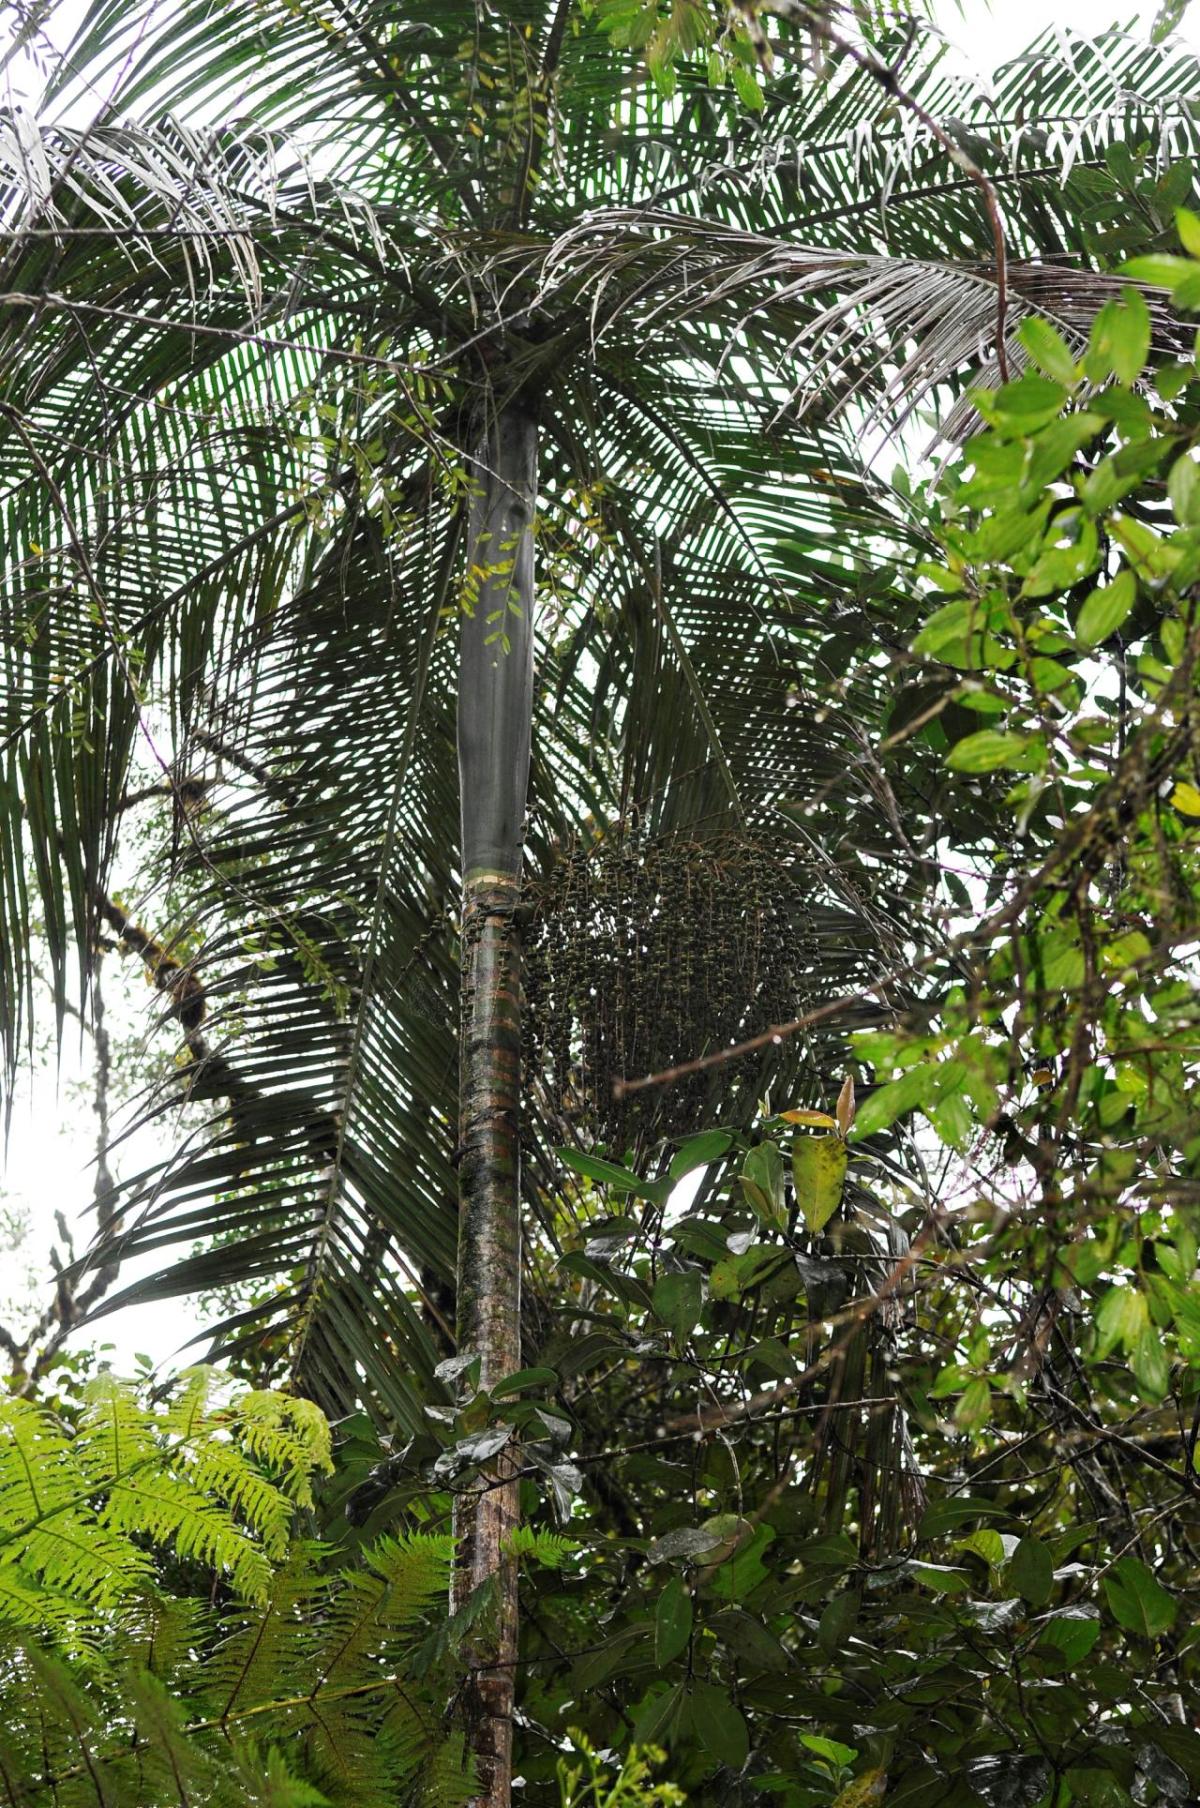 The Juçara Palm mother tree